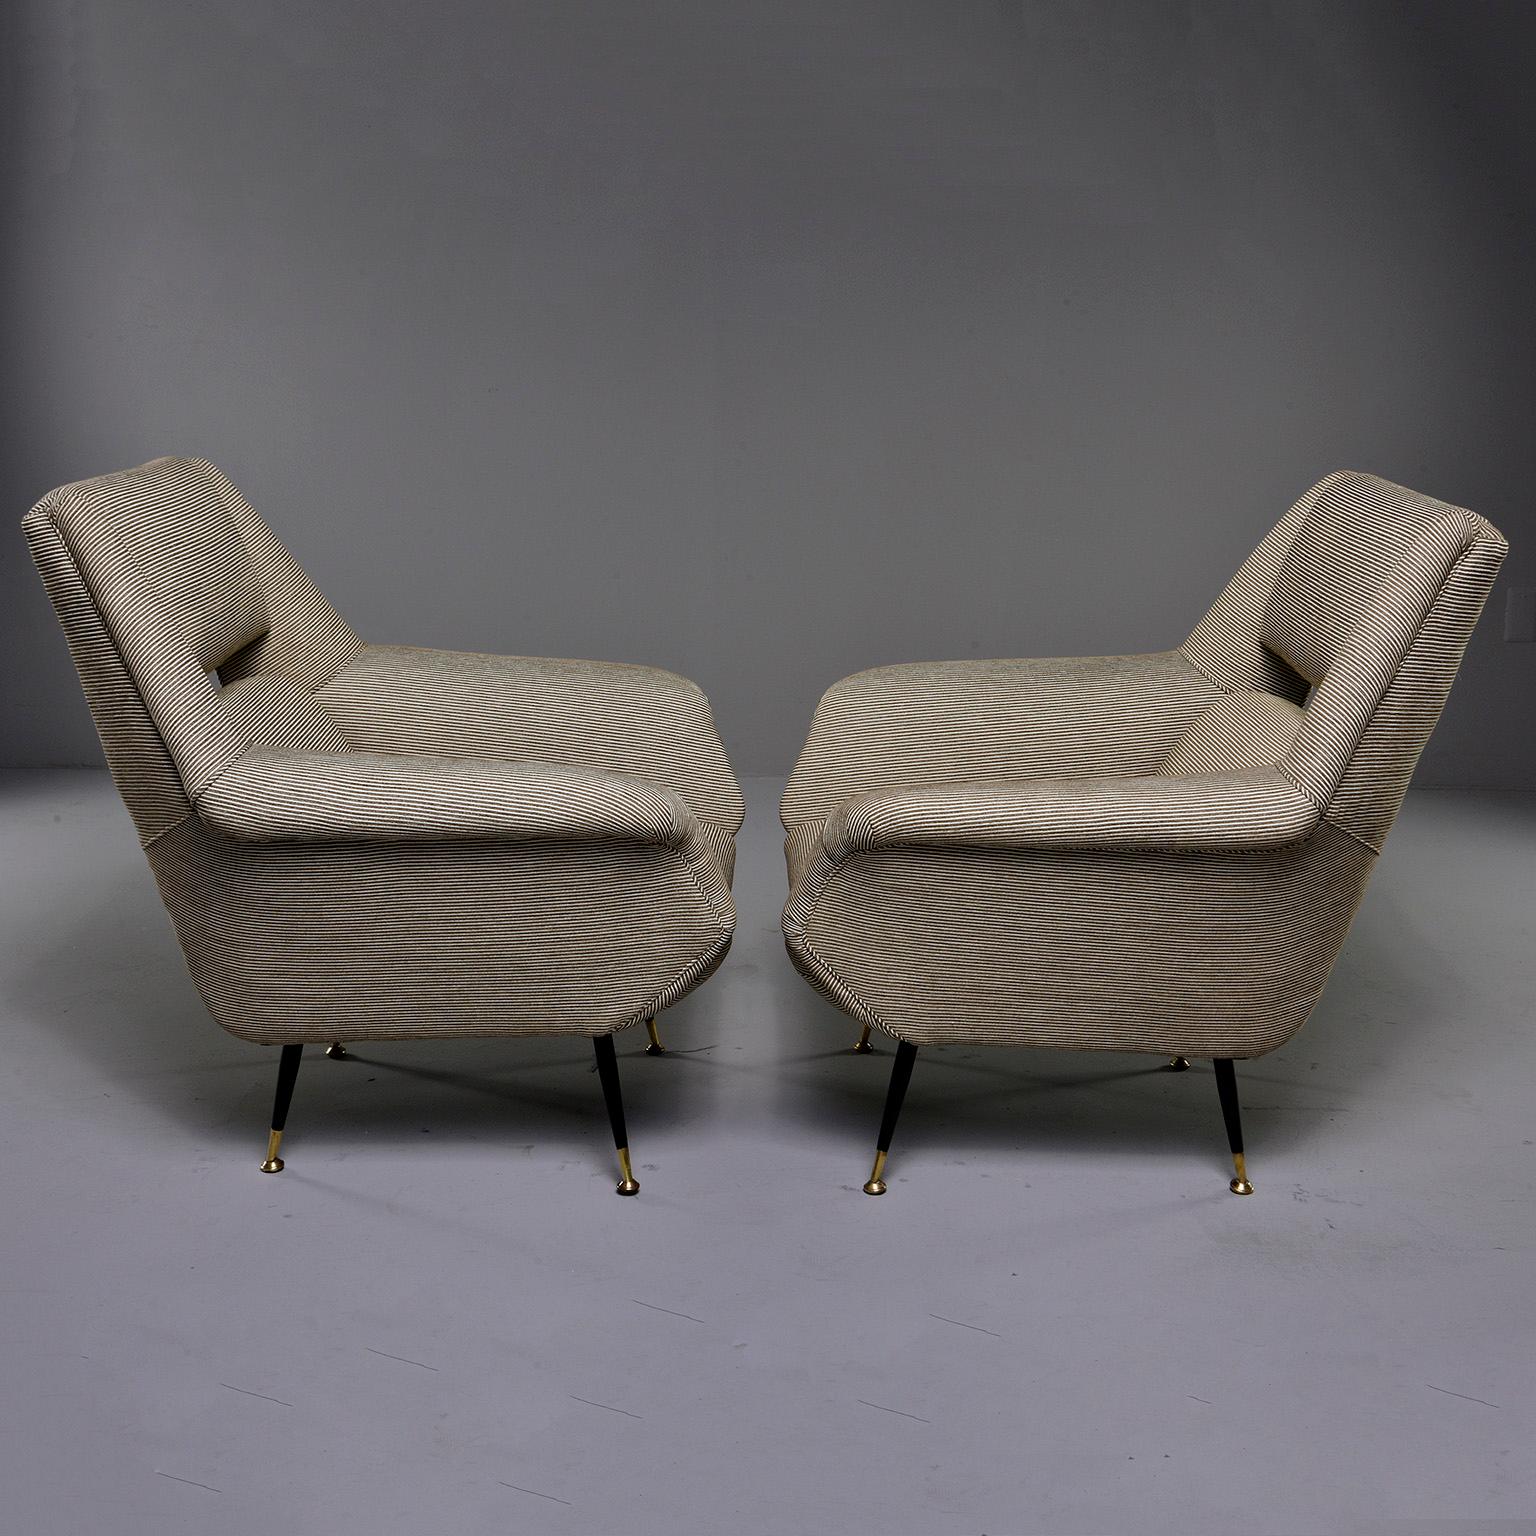 Italian Pair of Newly Upholstered Midcentury Chairs by Gigi Radice for Minotti